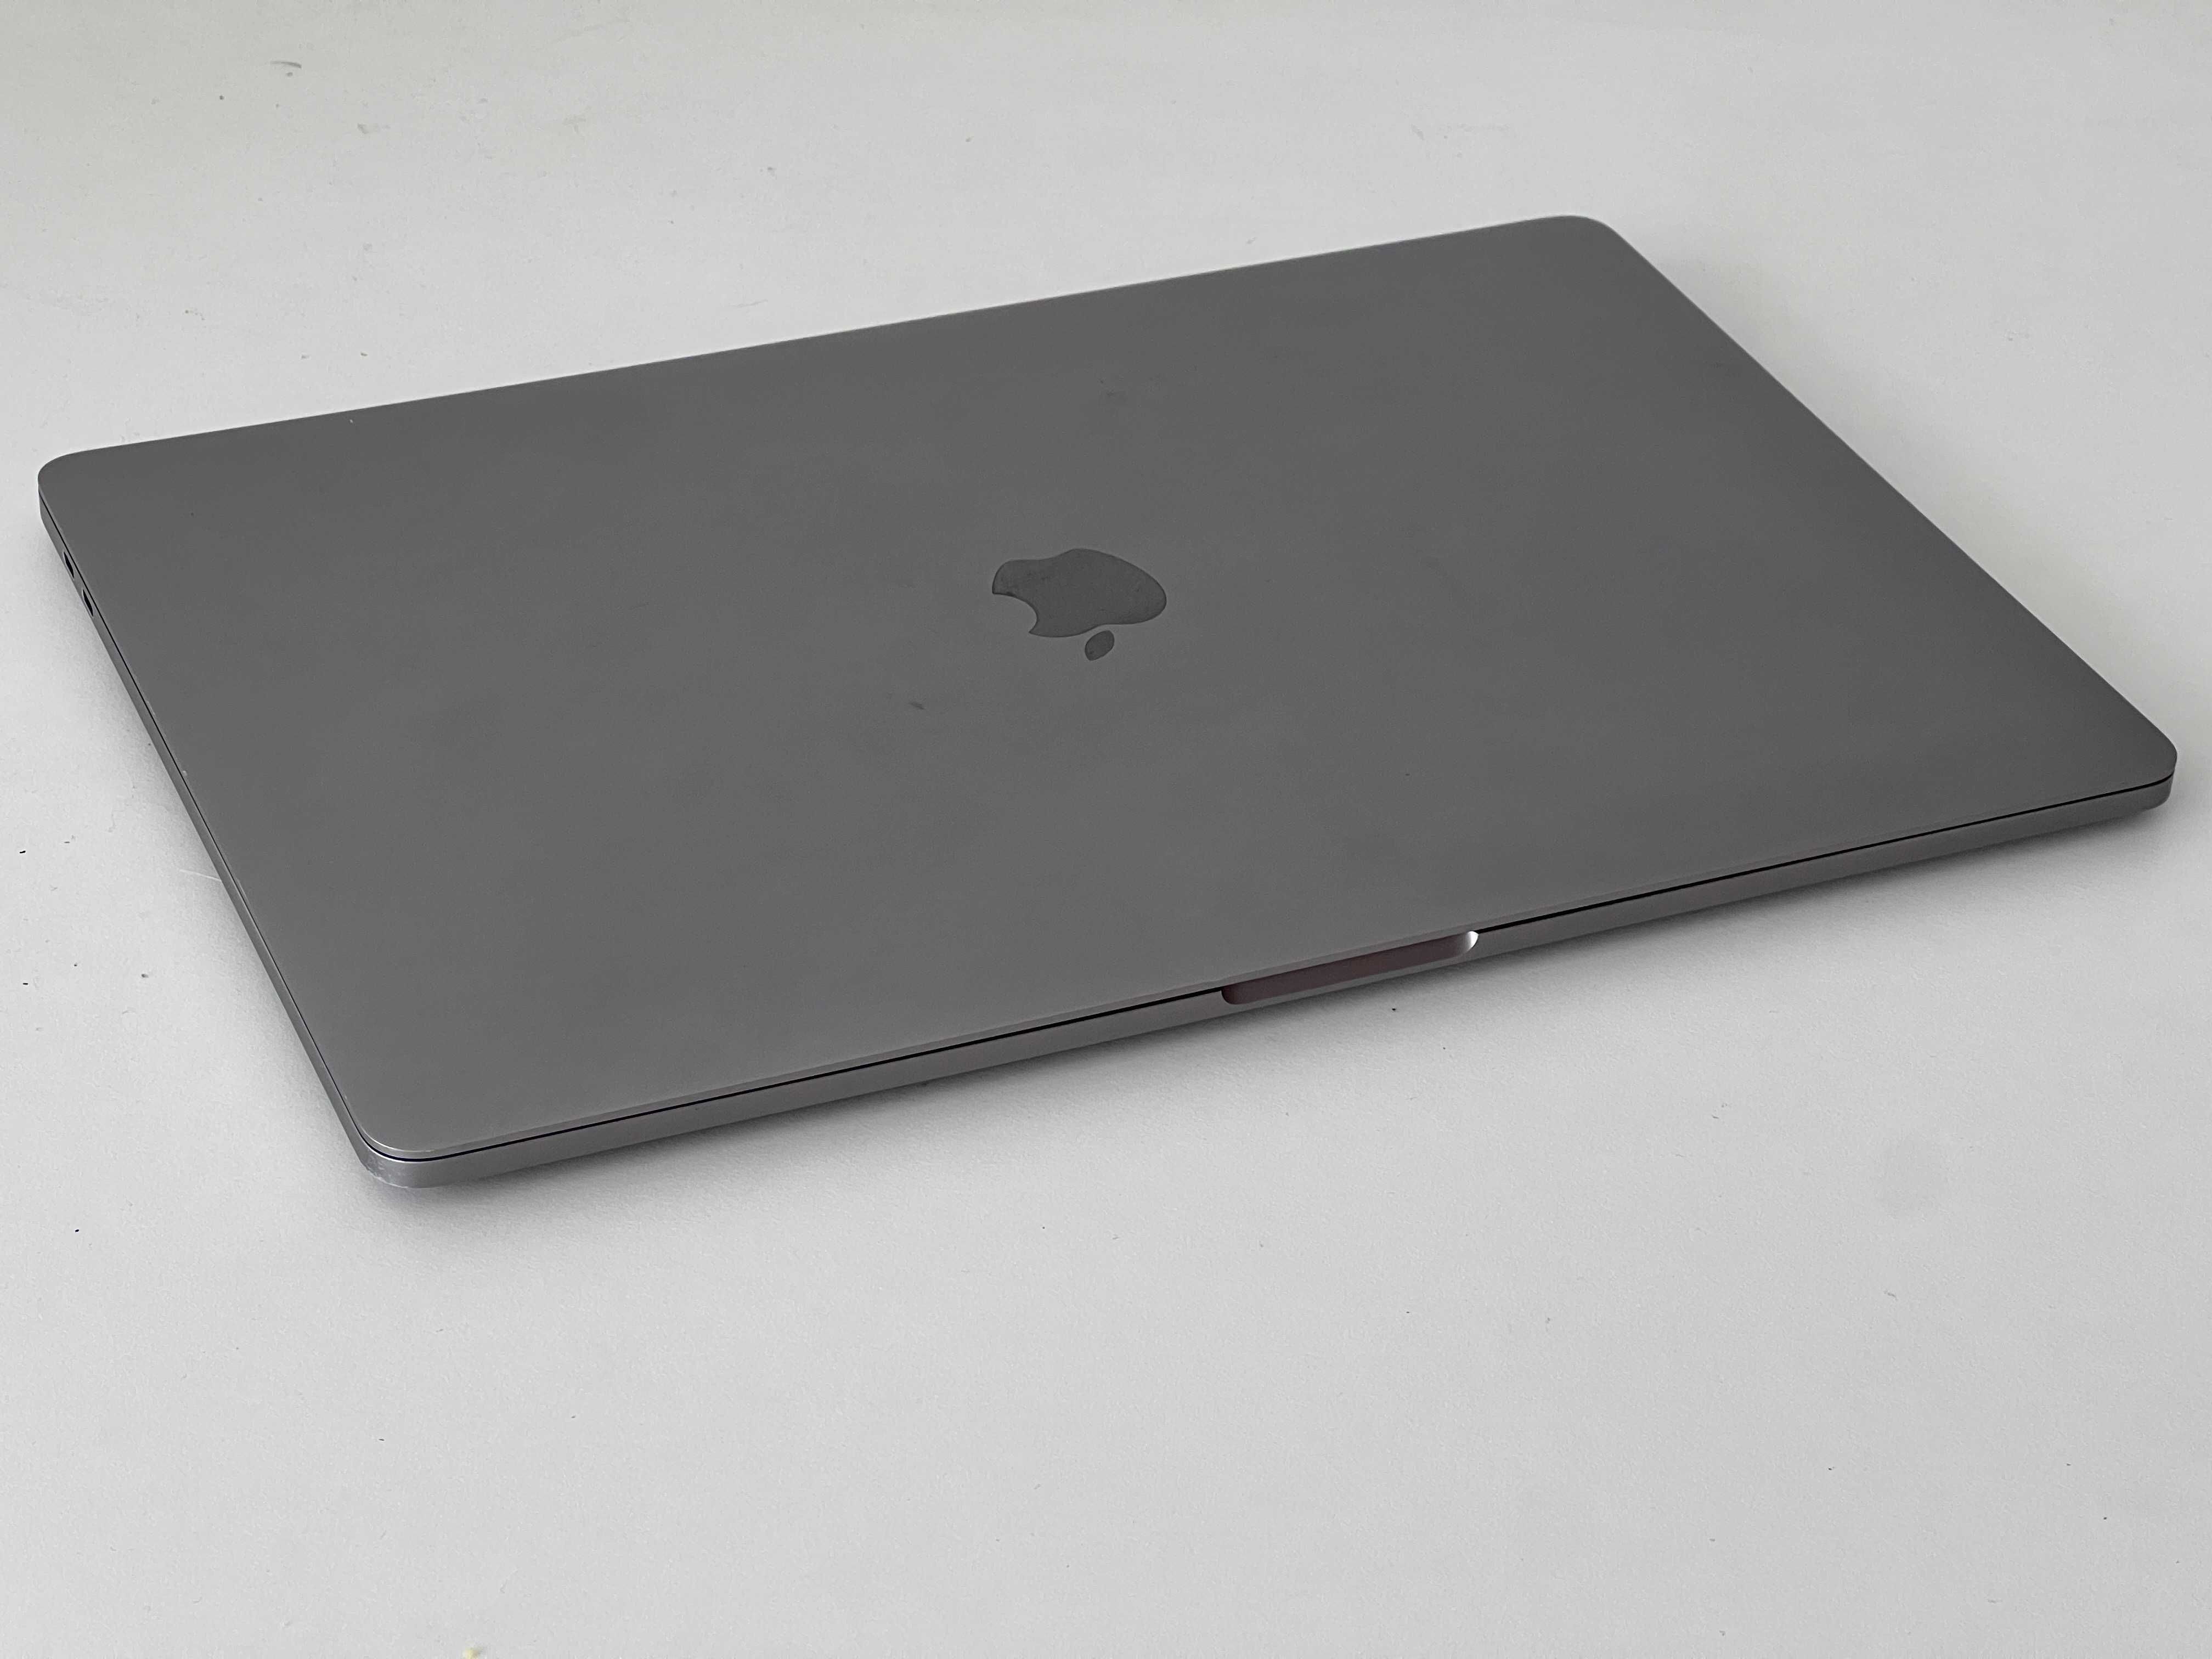 MacBook Pro 15.4-inch 2018 Processor 2.9 GHz 6-Core Intel i9 500GB SSD